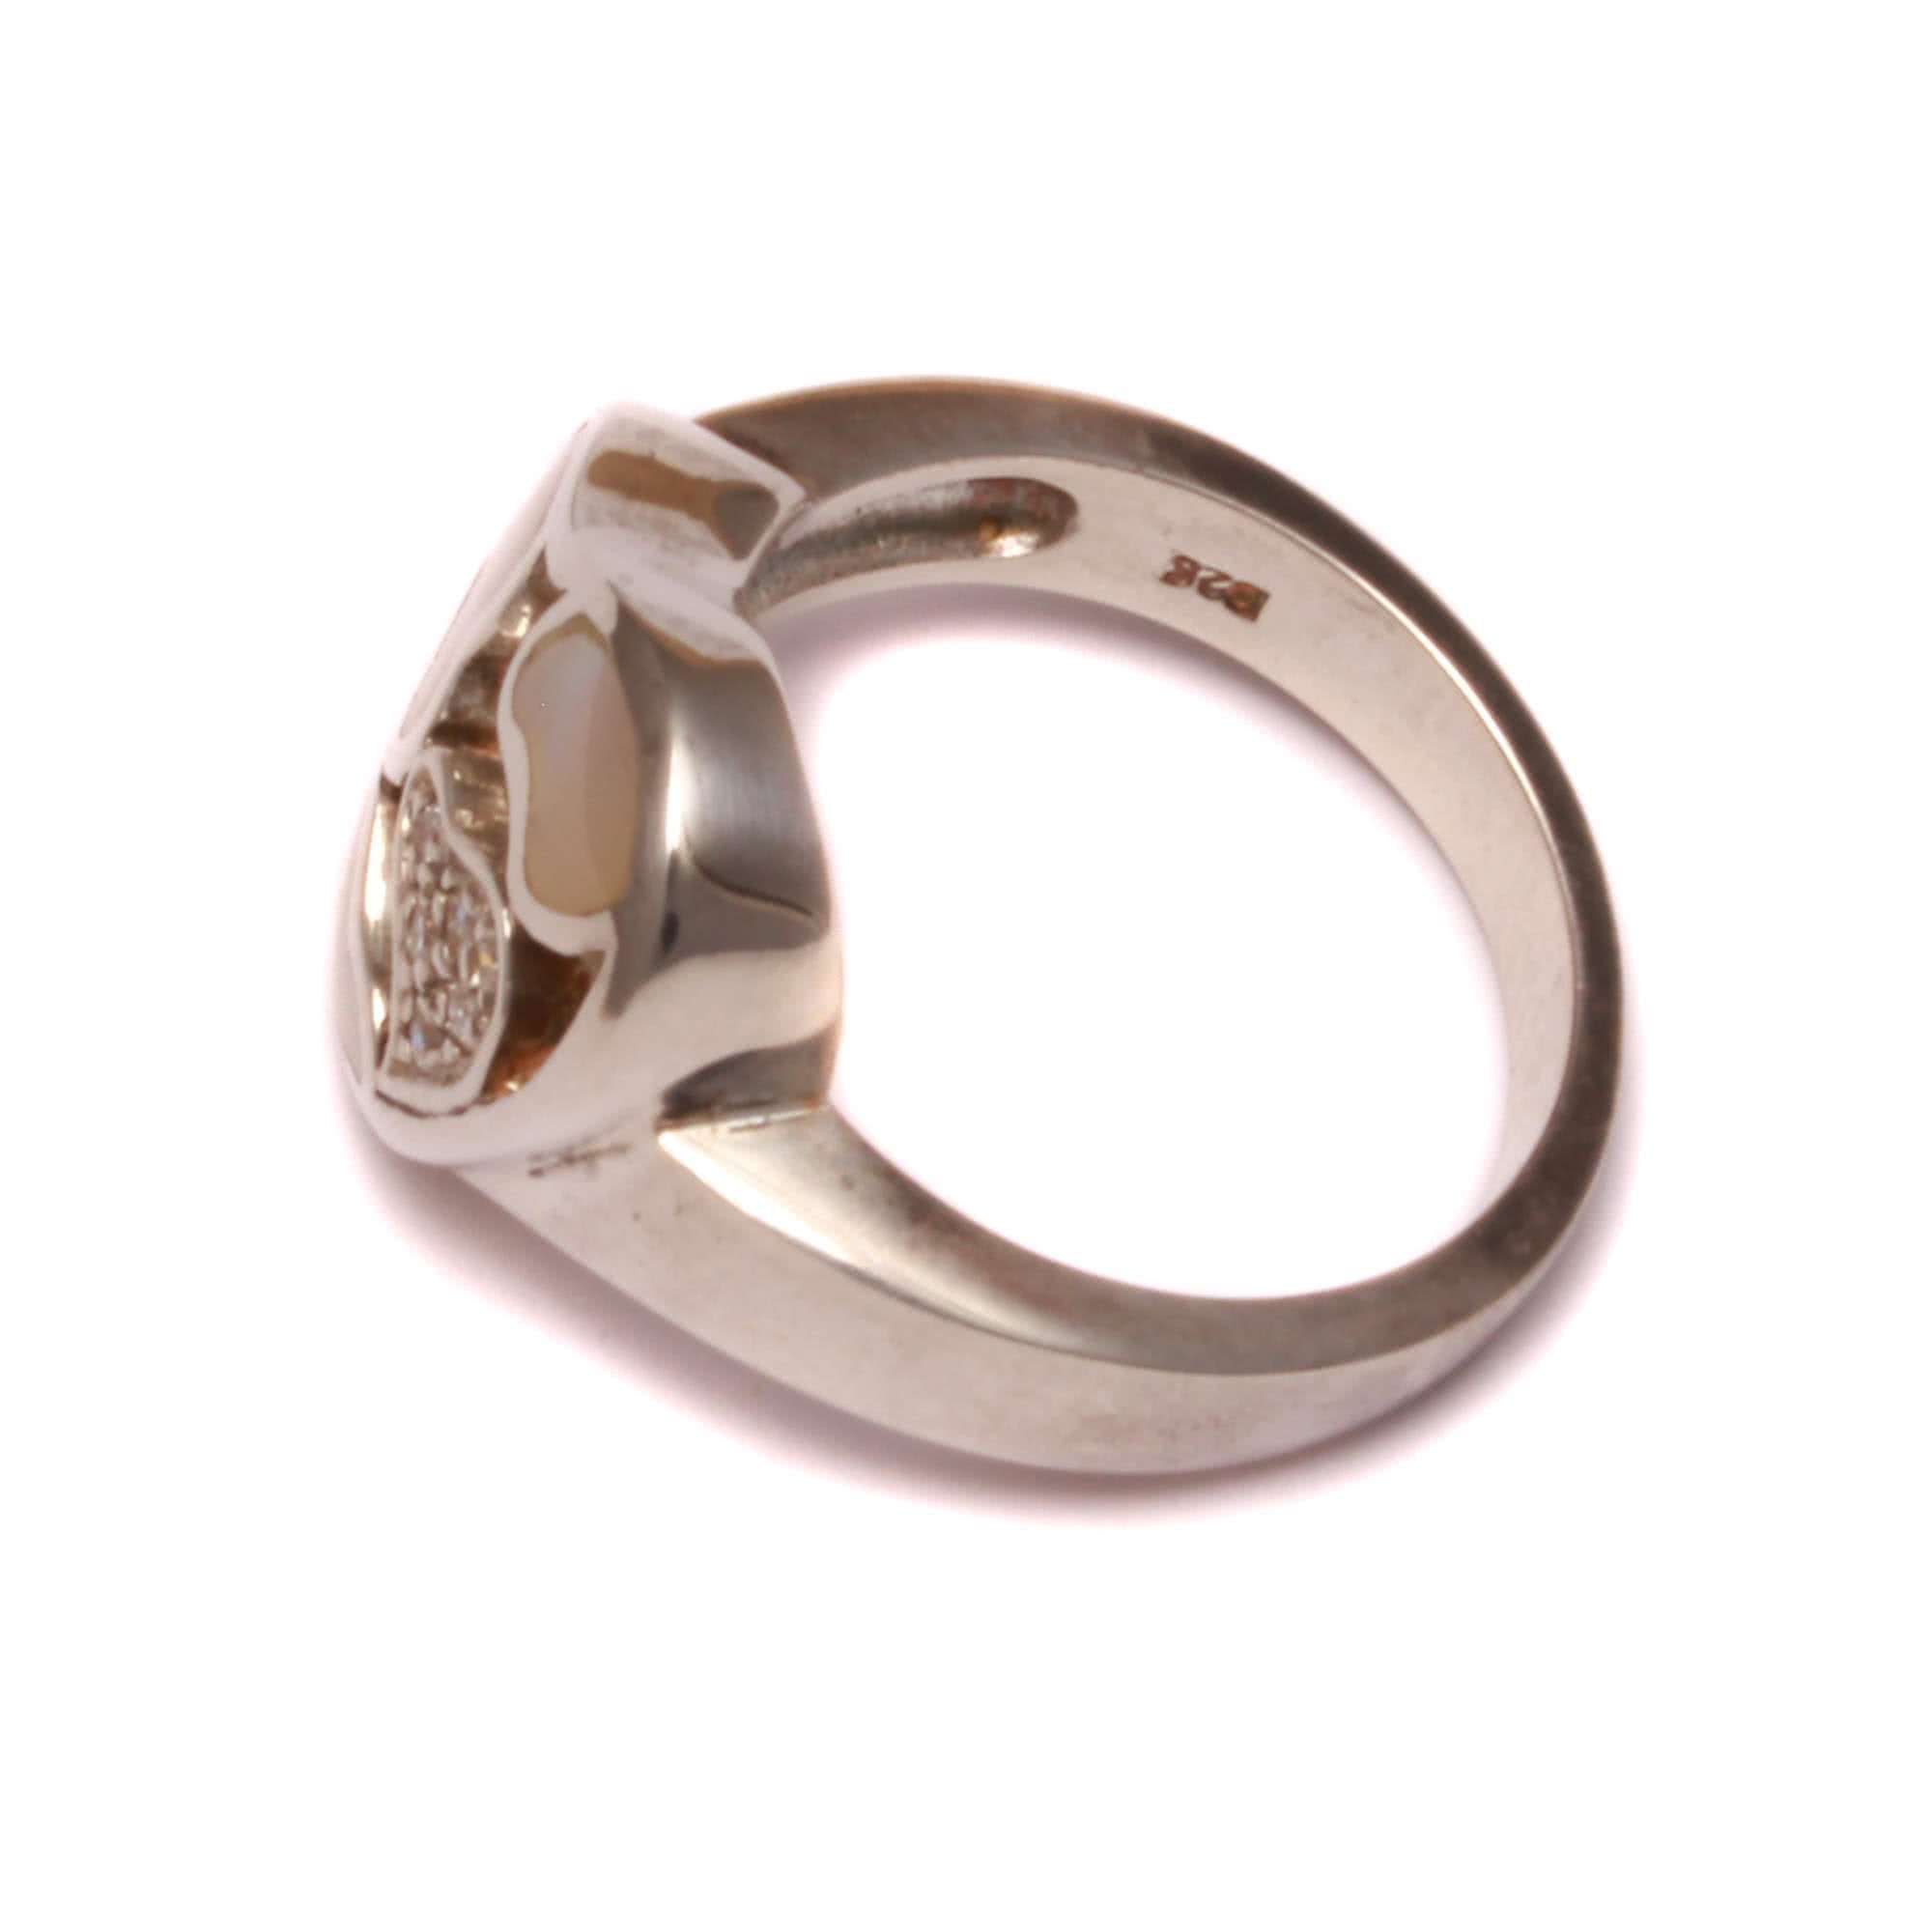 Perlmutt Herz Ring aus 925 Sterling Silber - 1072 - Love Your Diamonds